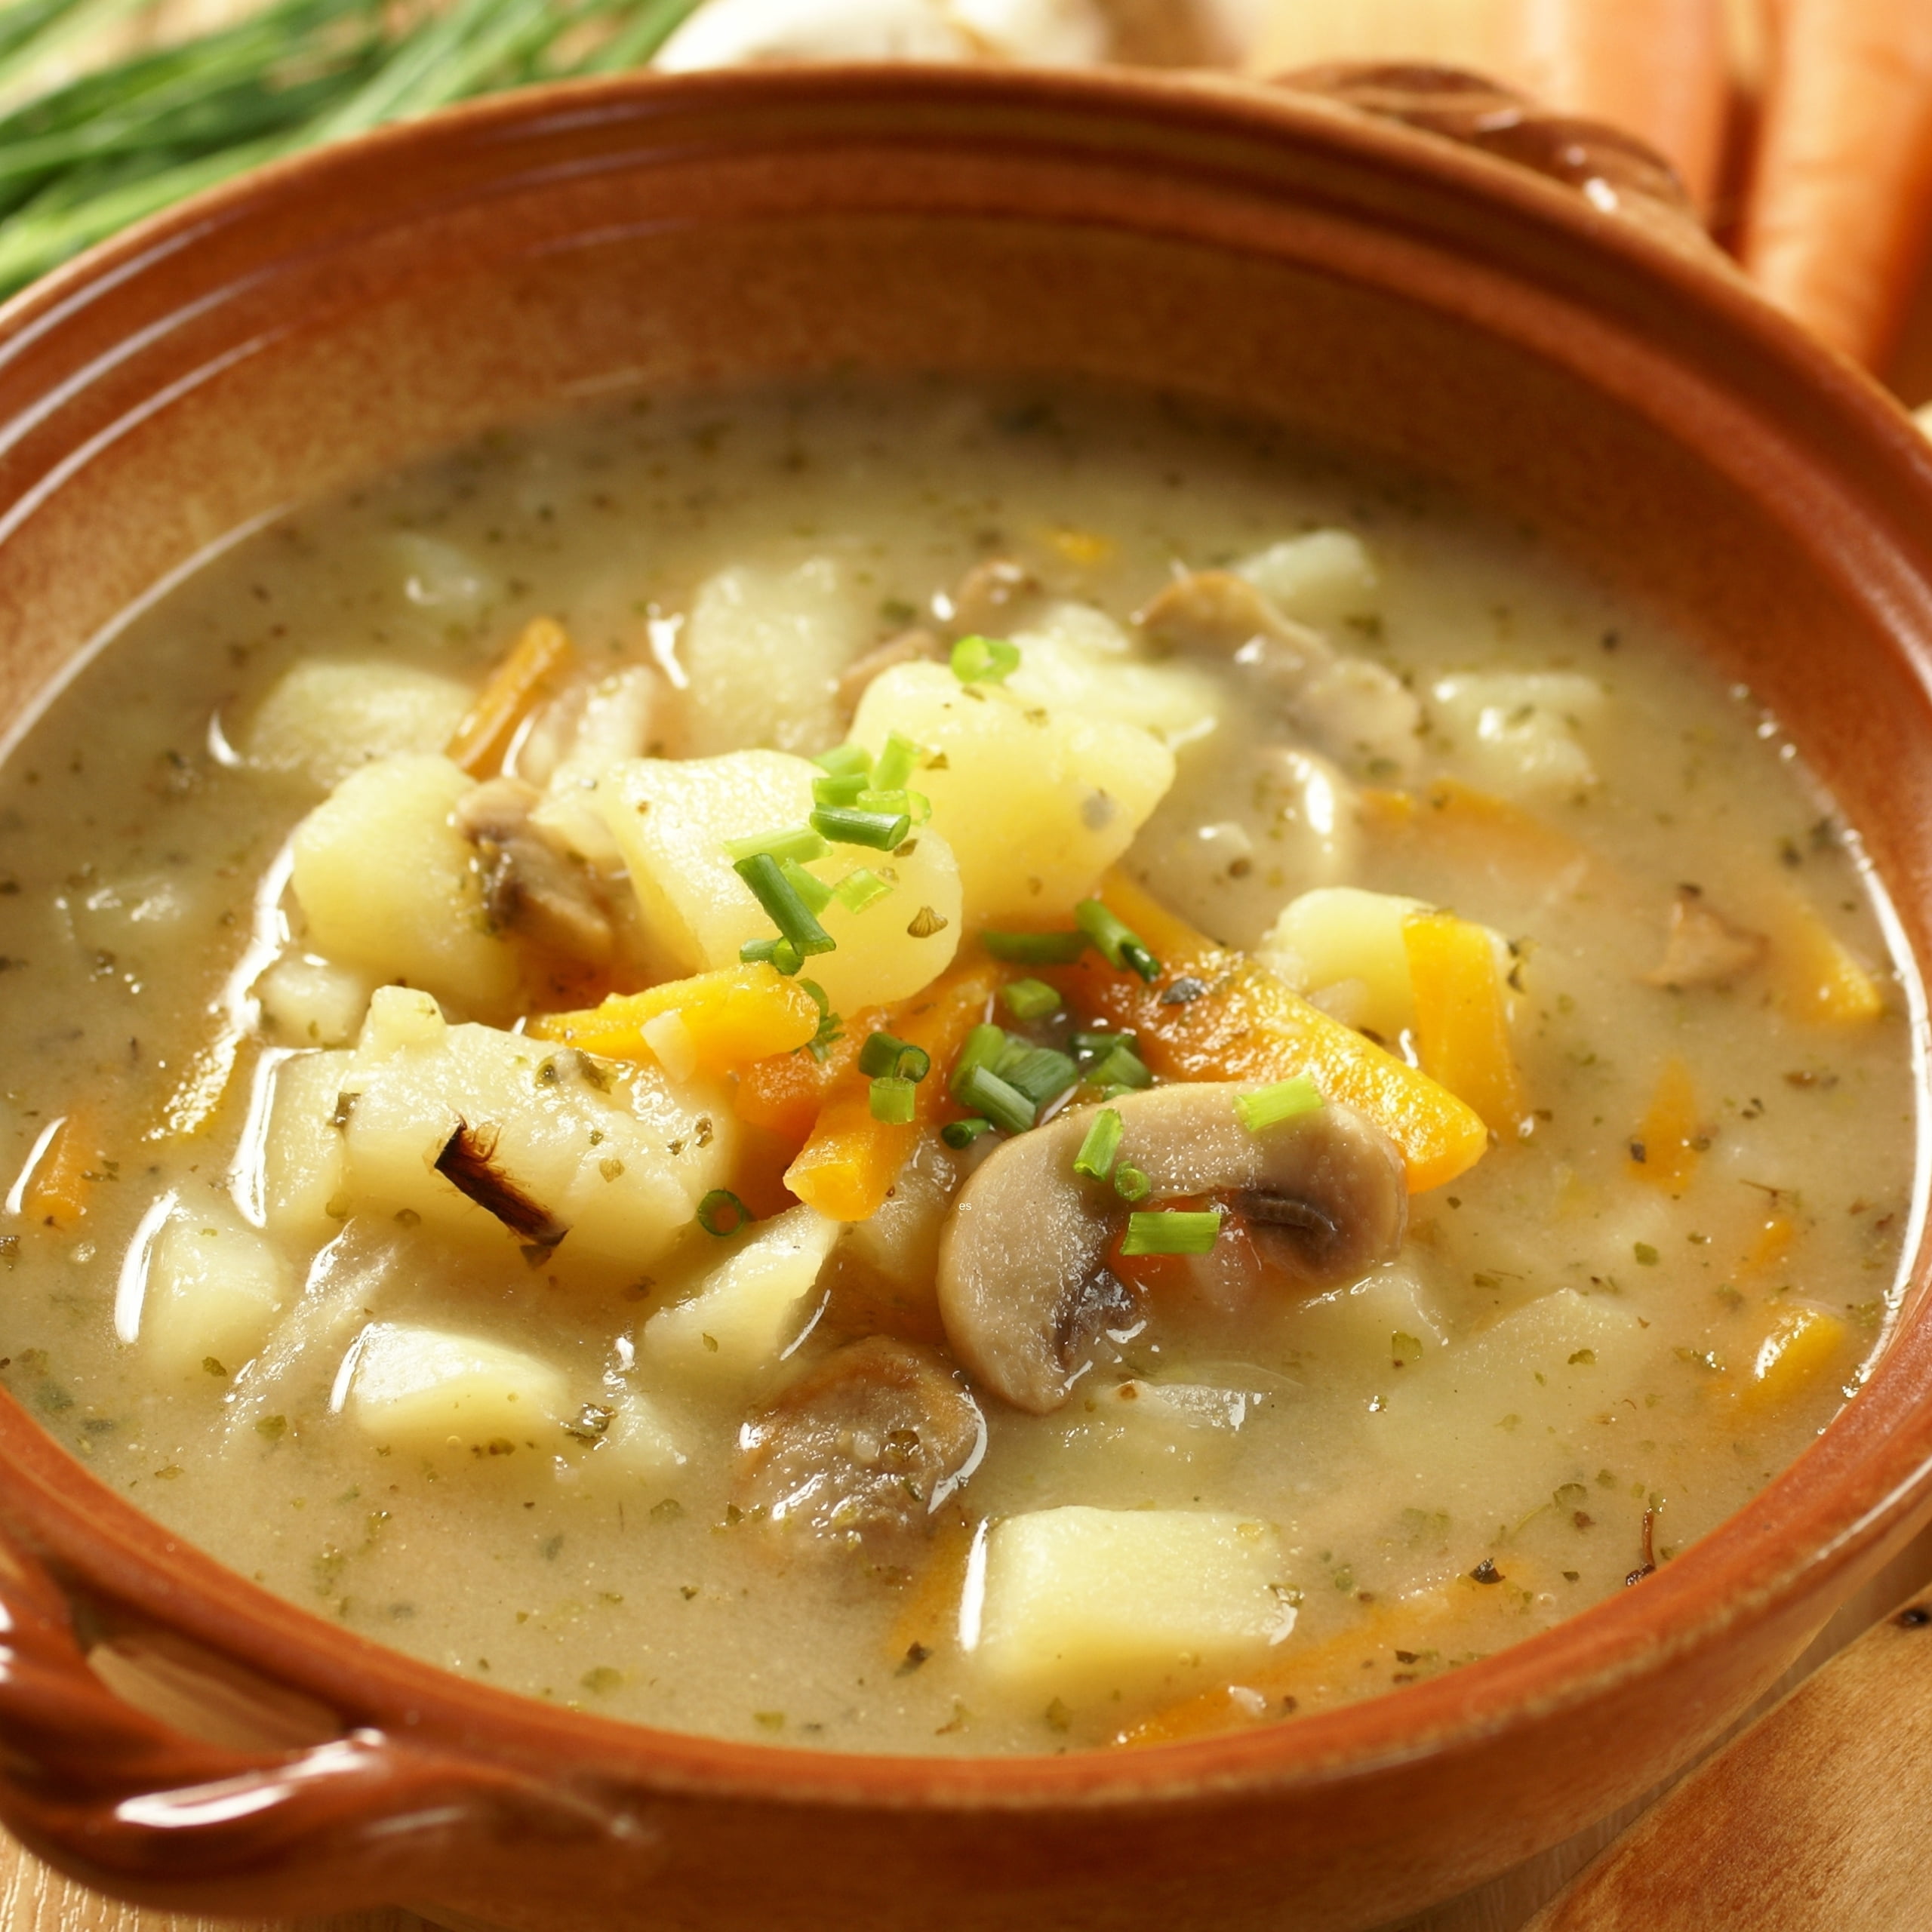 Potato soup recipes with few ingredients